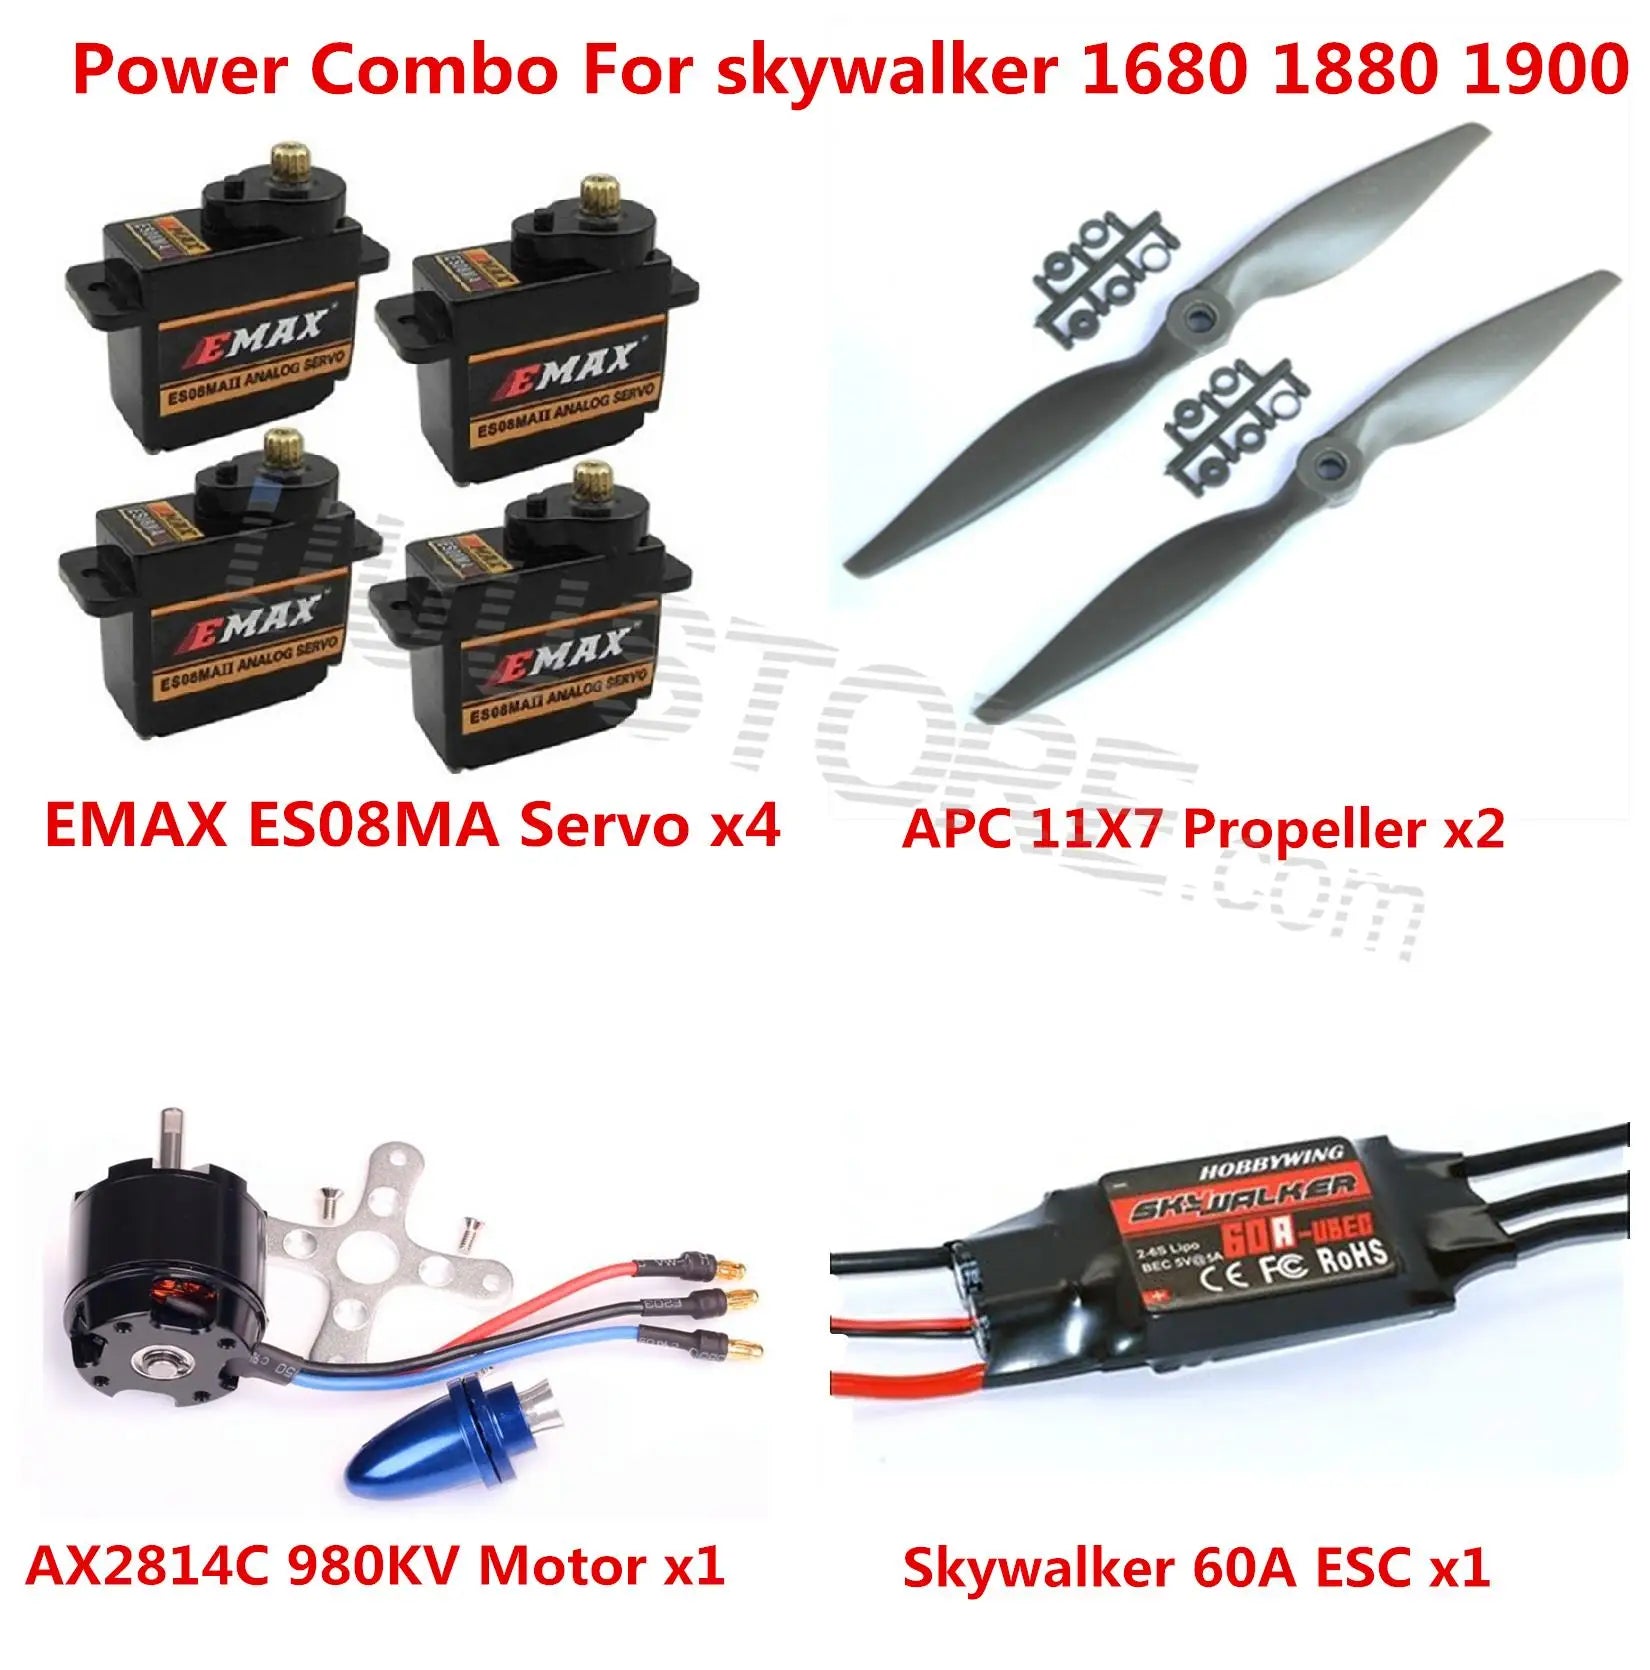 Power Combo Kit For Skywalker 1680 1880 1900 EPO RC Airplane Motor ESC Props and Servos